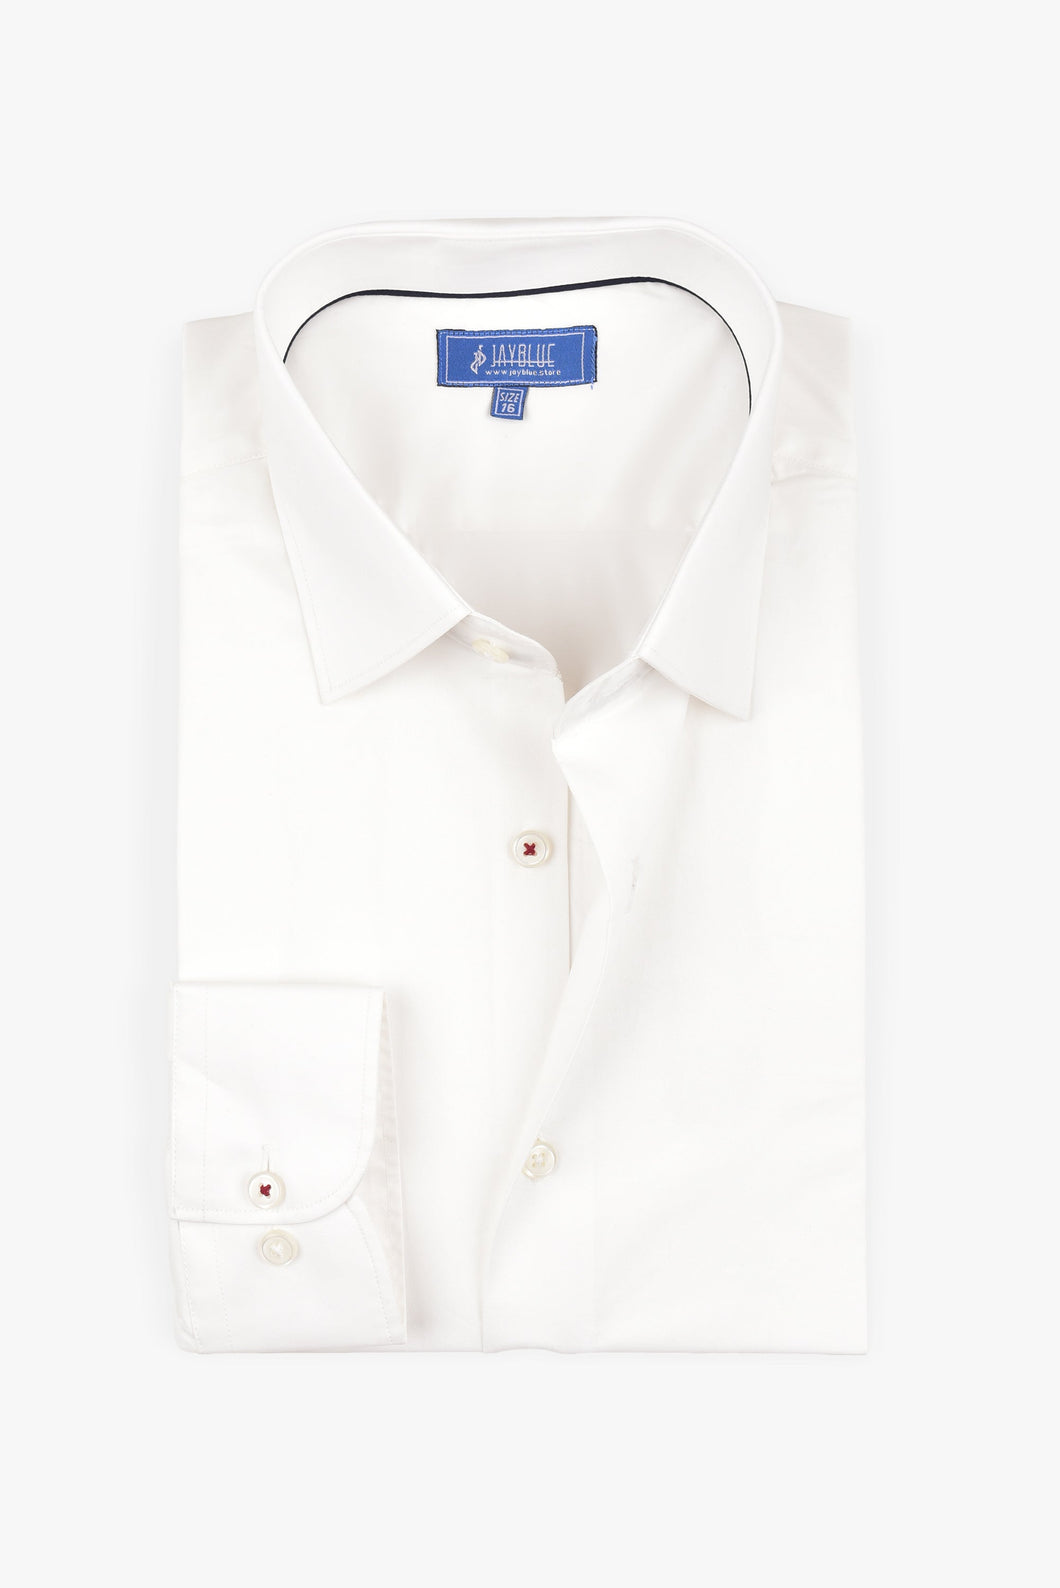 White Shirt (Modern Fit)